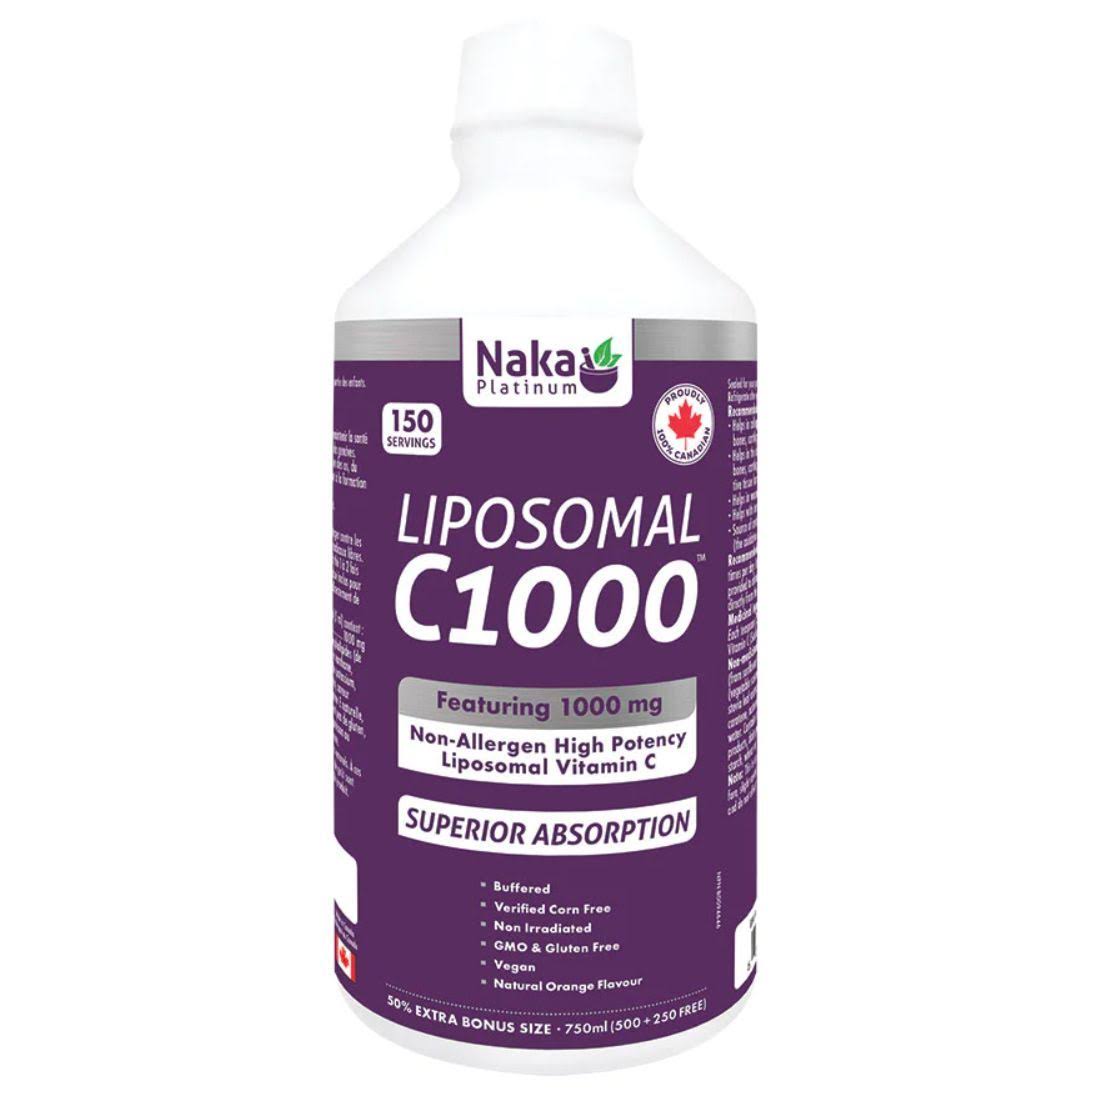 Naka Liposomal C 1000 - 750ml